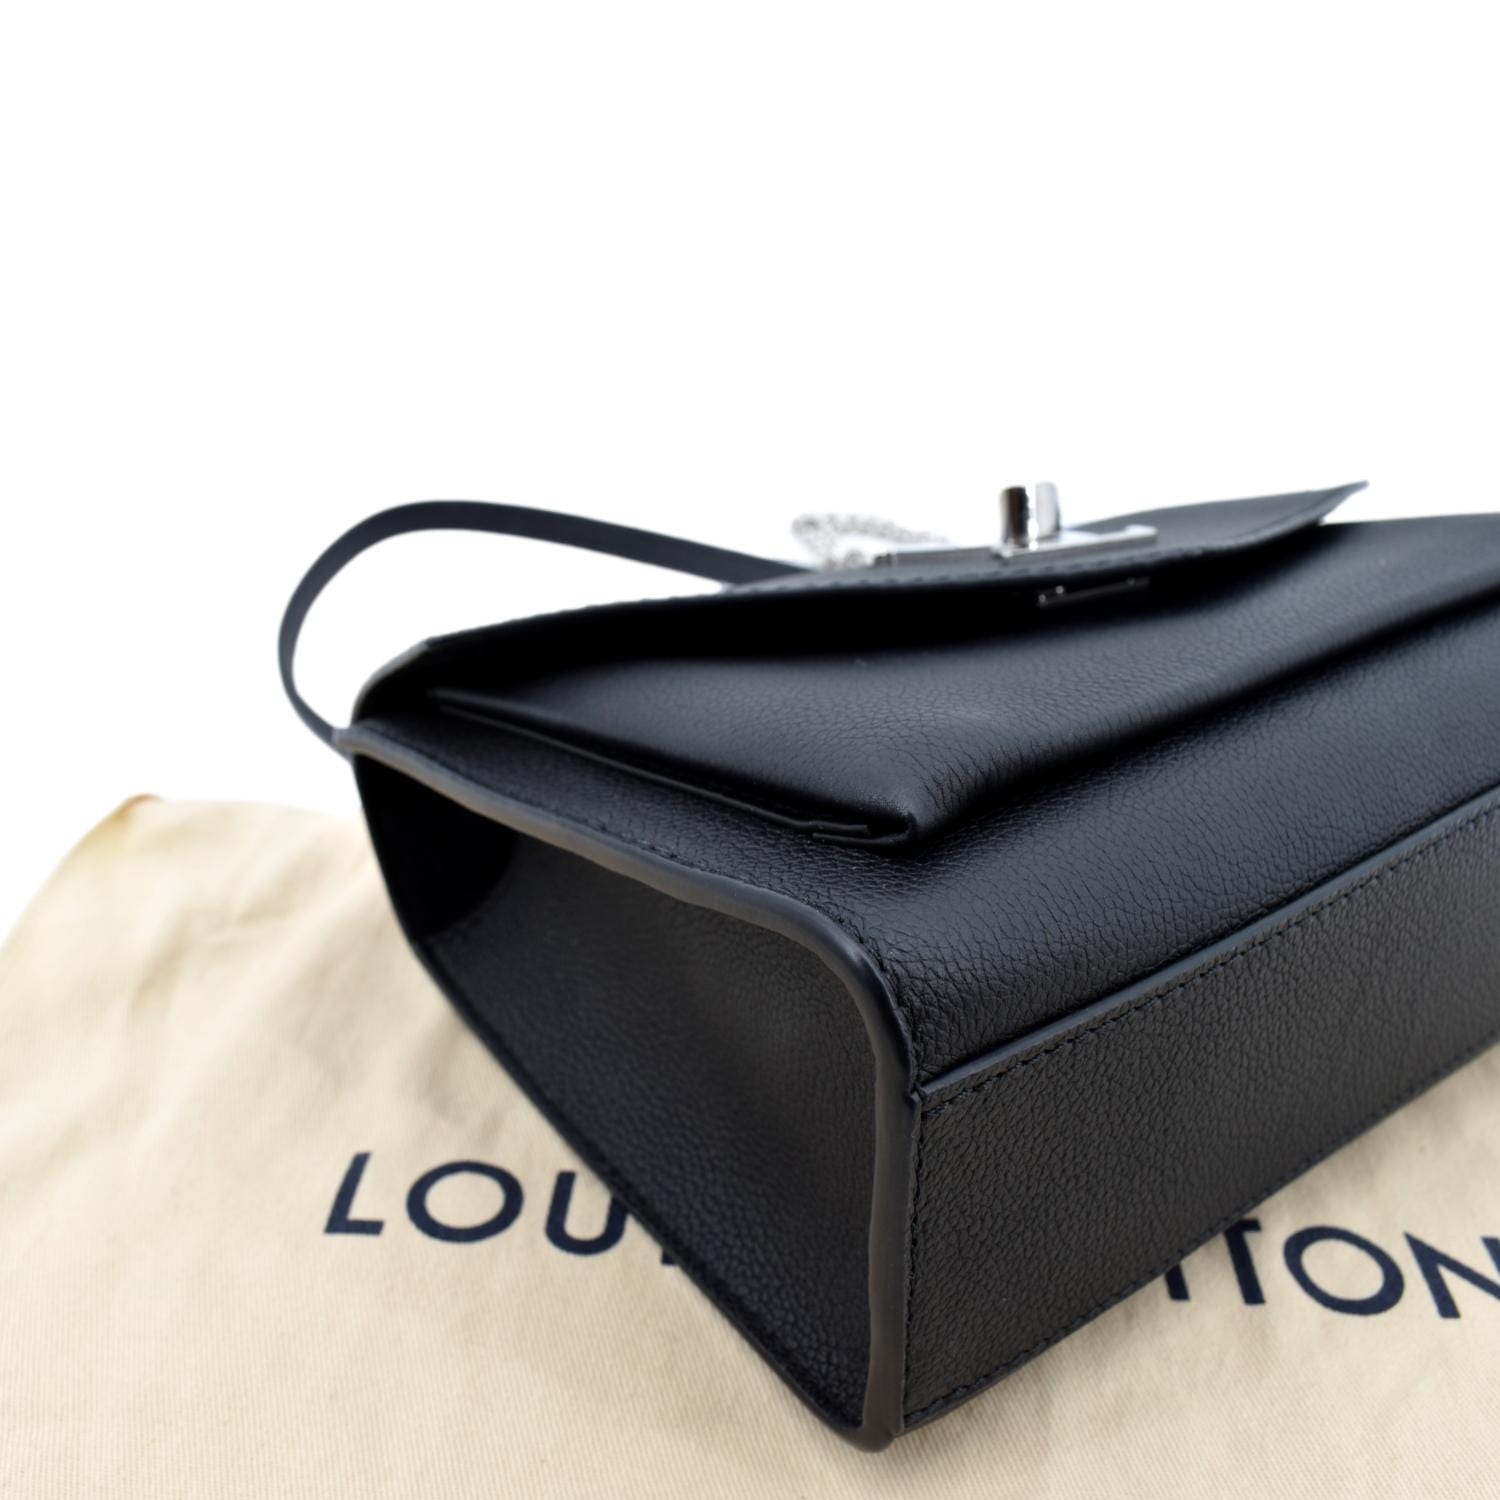 MYLOCKME SATCHEL CHAIN BAG Louis Vuitton - The Designer Club